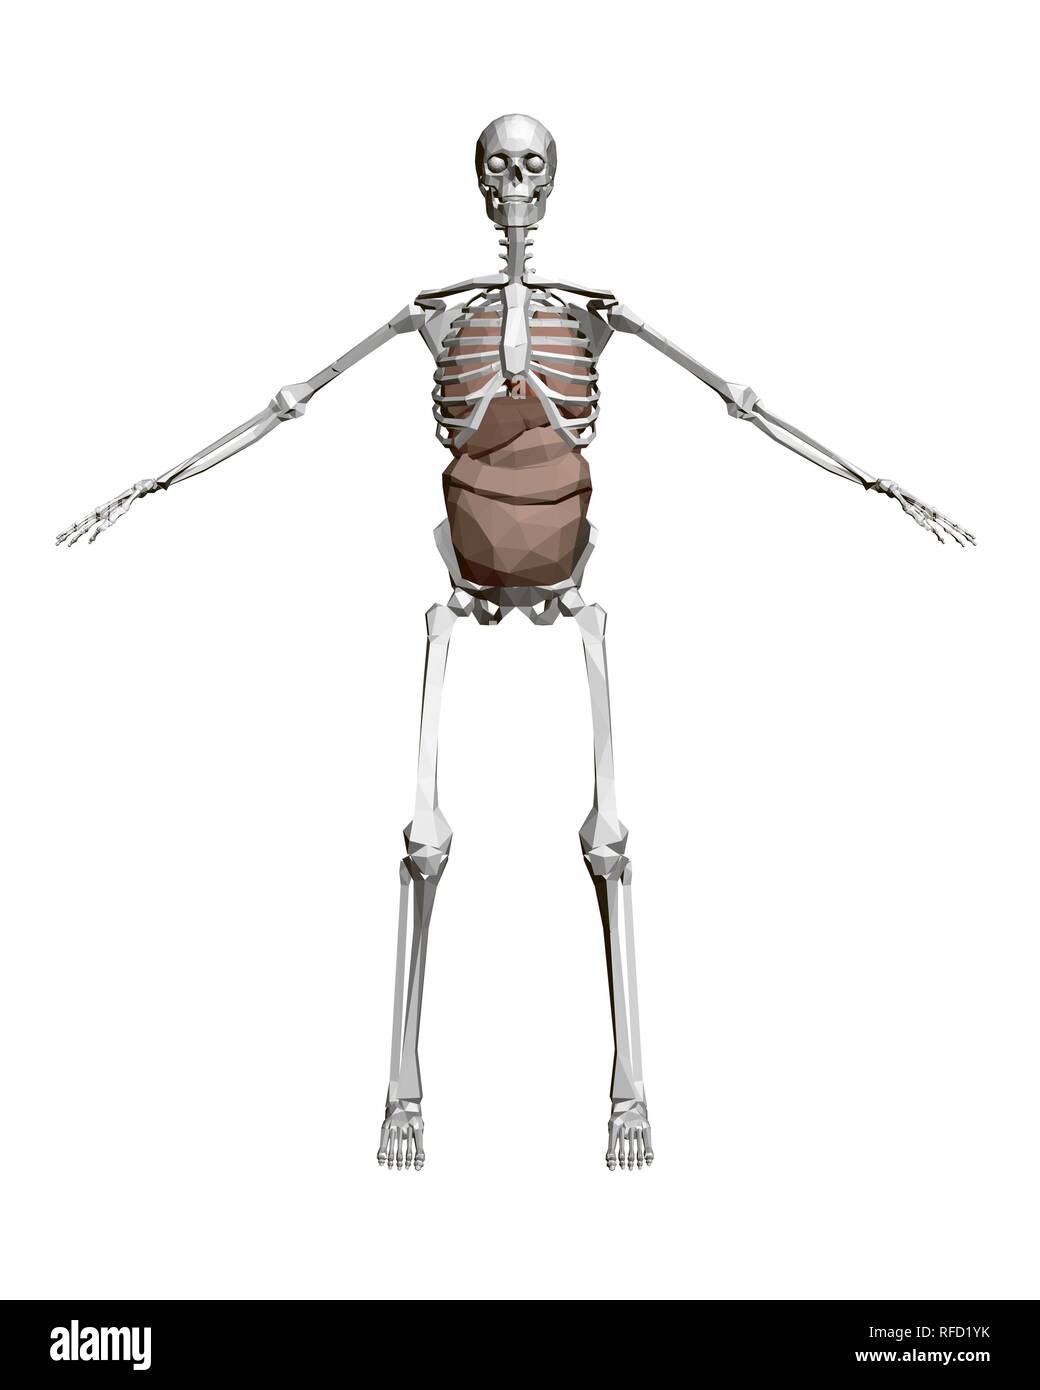 Human Skeleton and Brain, artwork Stock Photo - Alamy